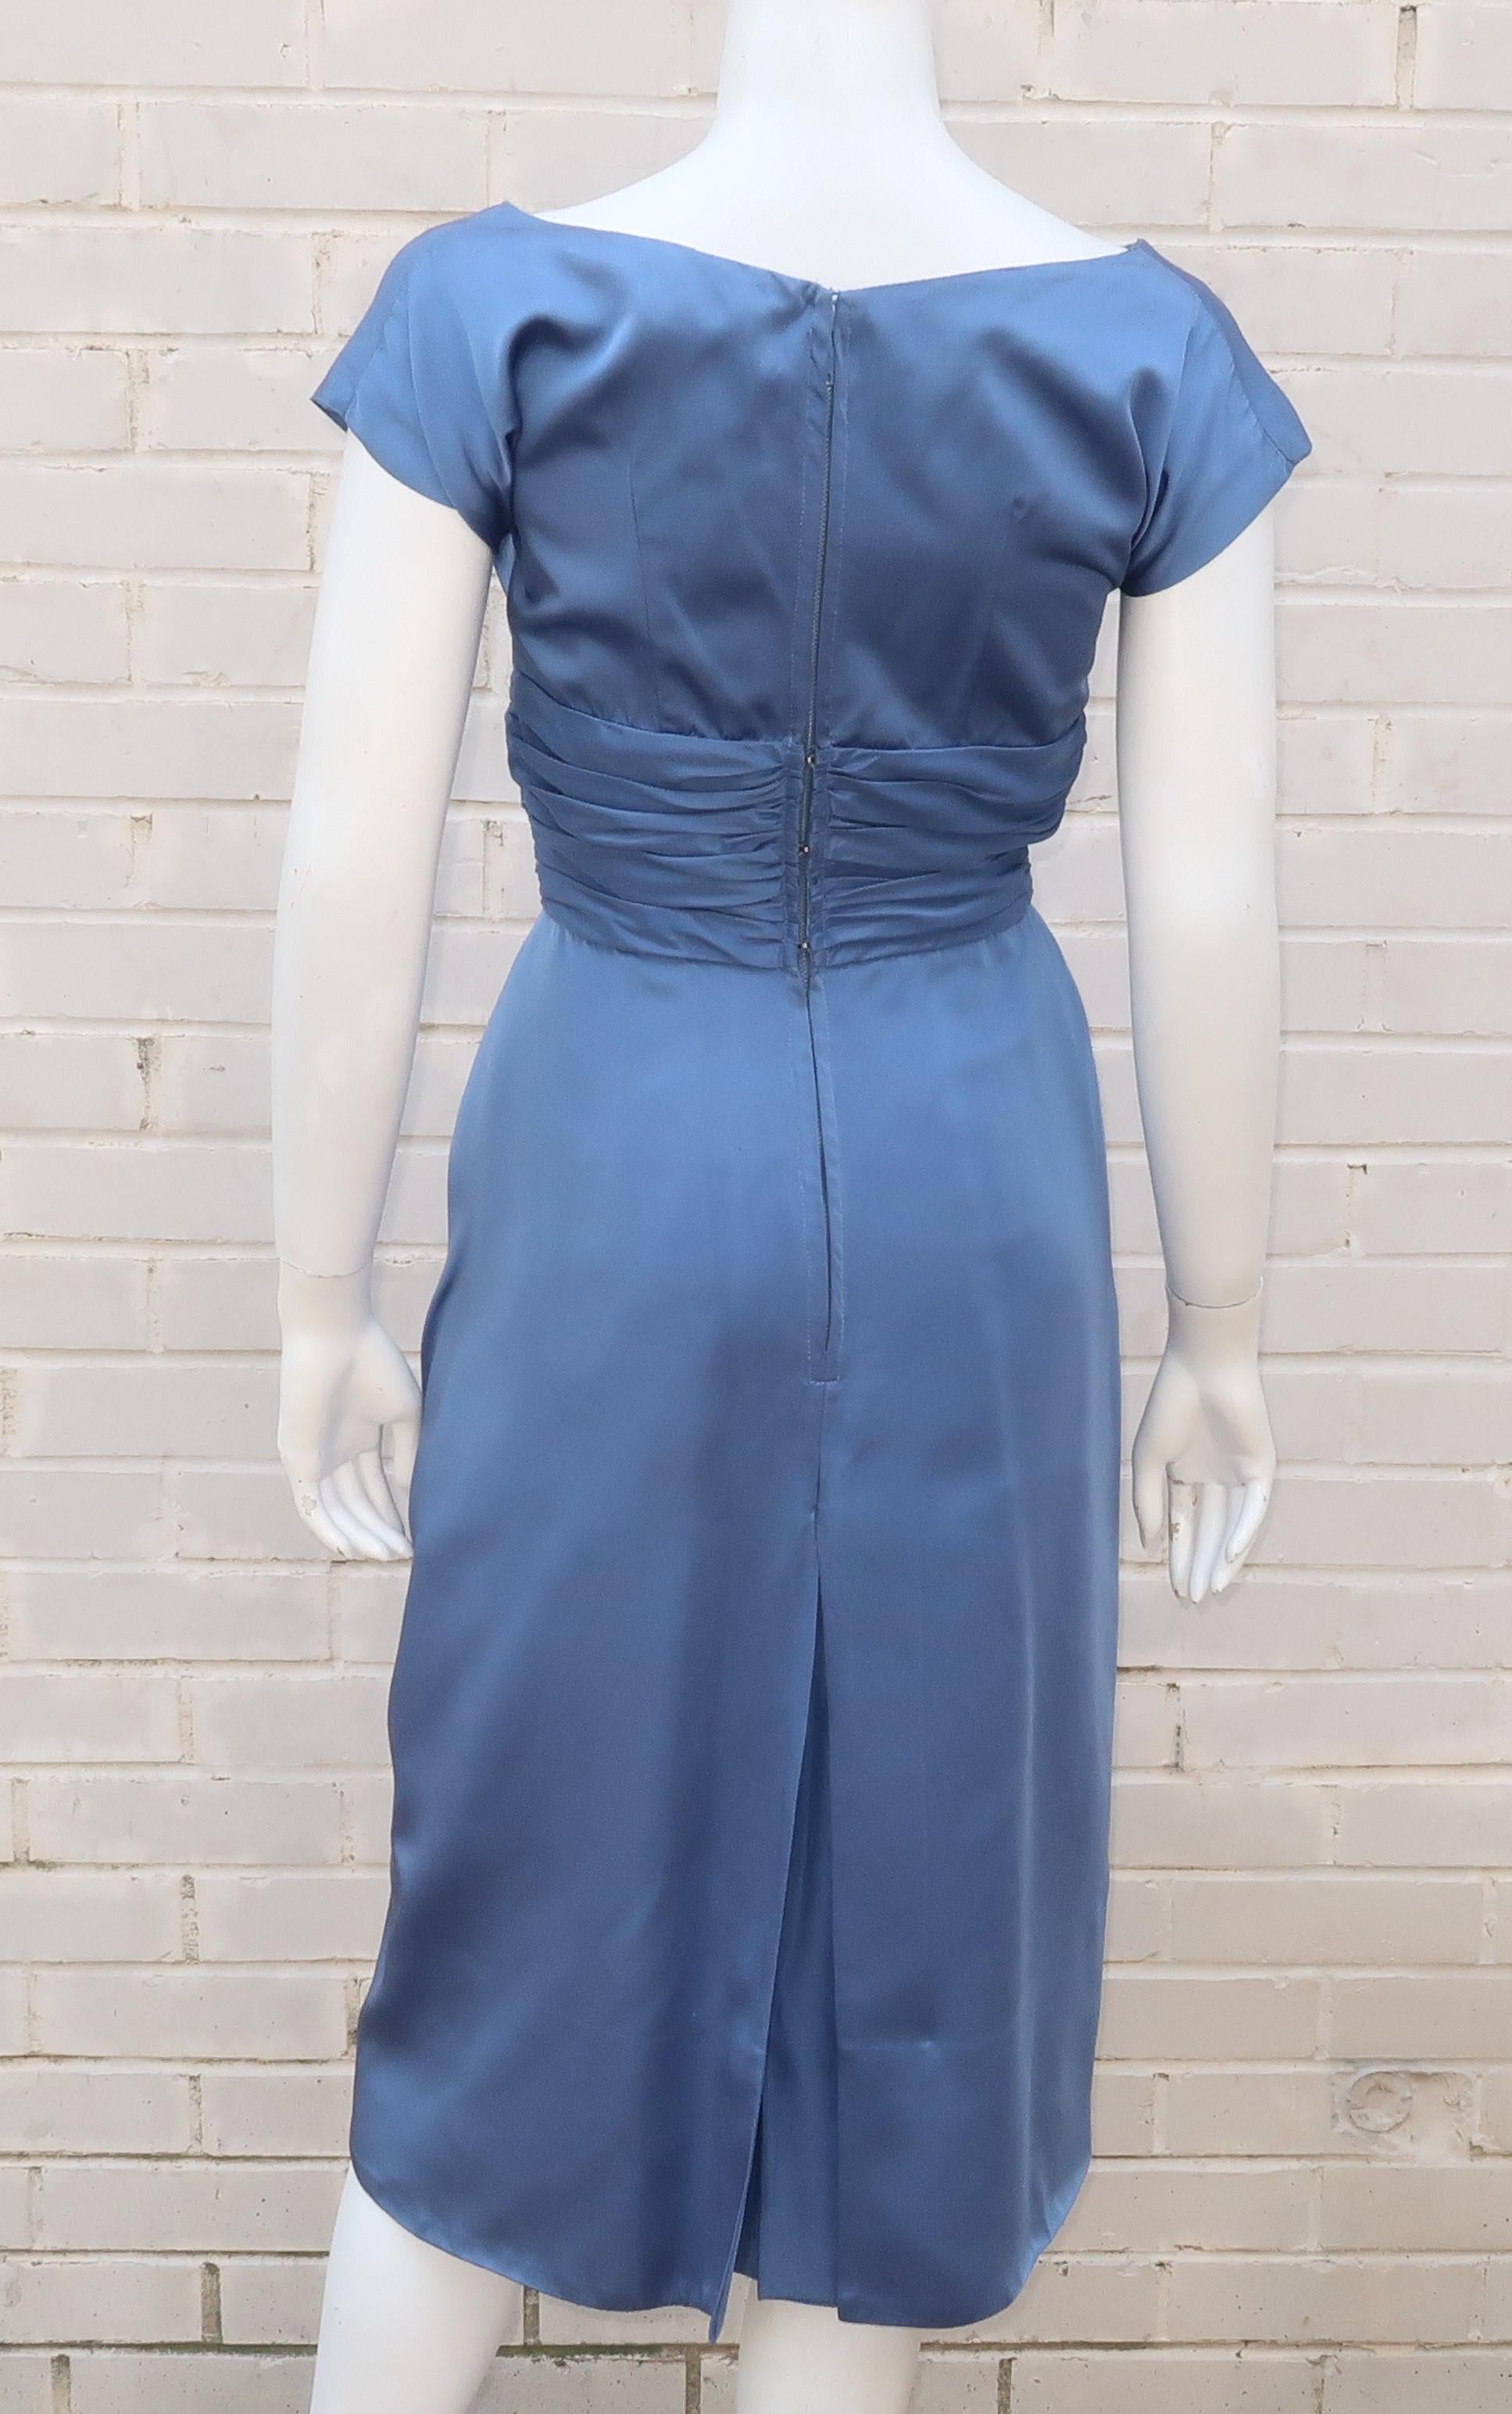 Emma Domb 1950's Periwinkle Blue Satin Cocktail Dress 4